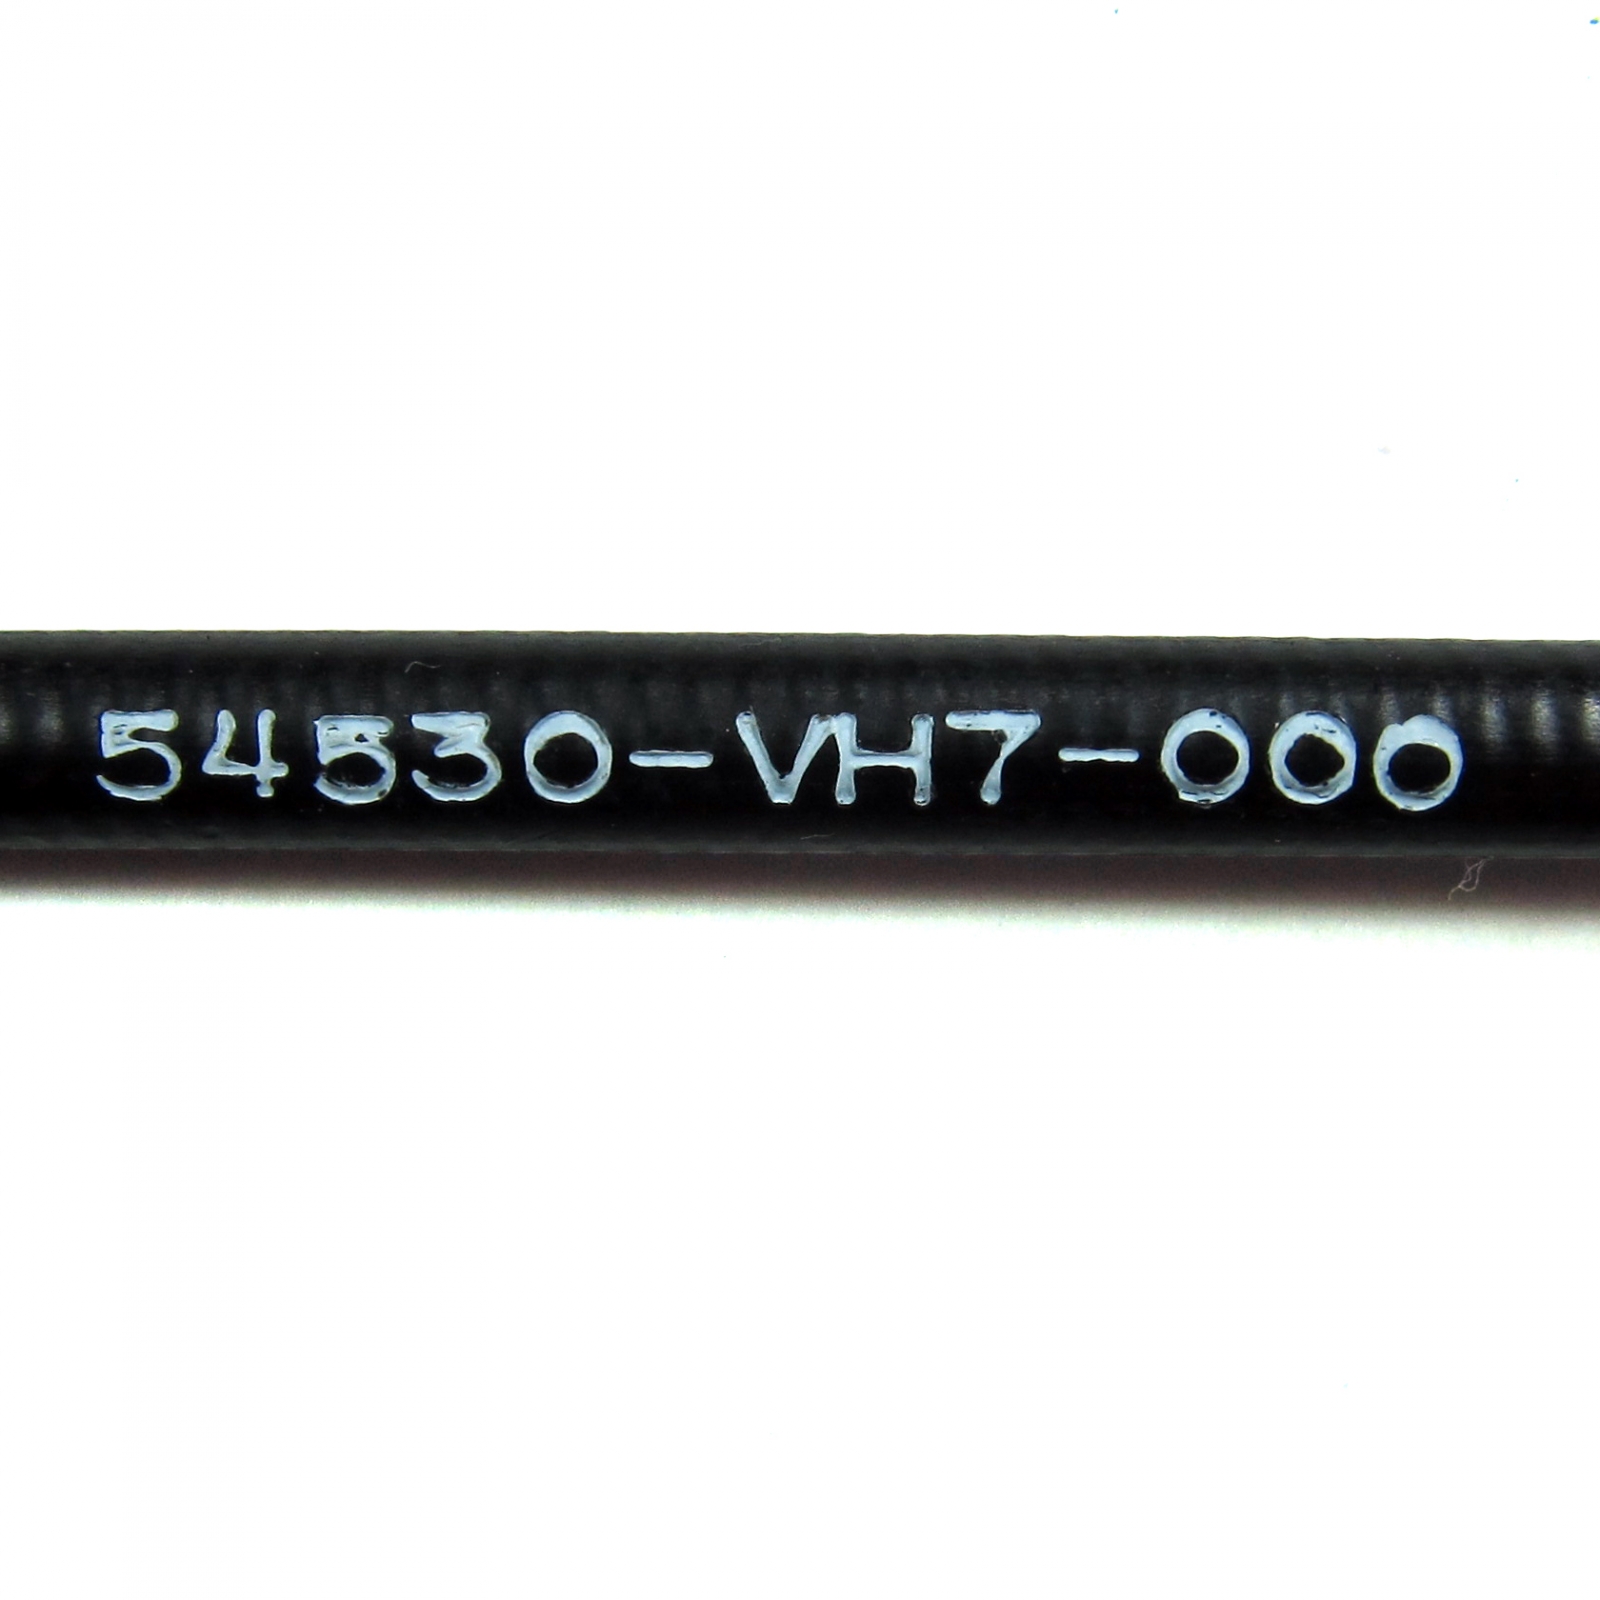 Honda 54530-VB3-802 Câble roto-stop pour tondeuse à gazon 